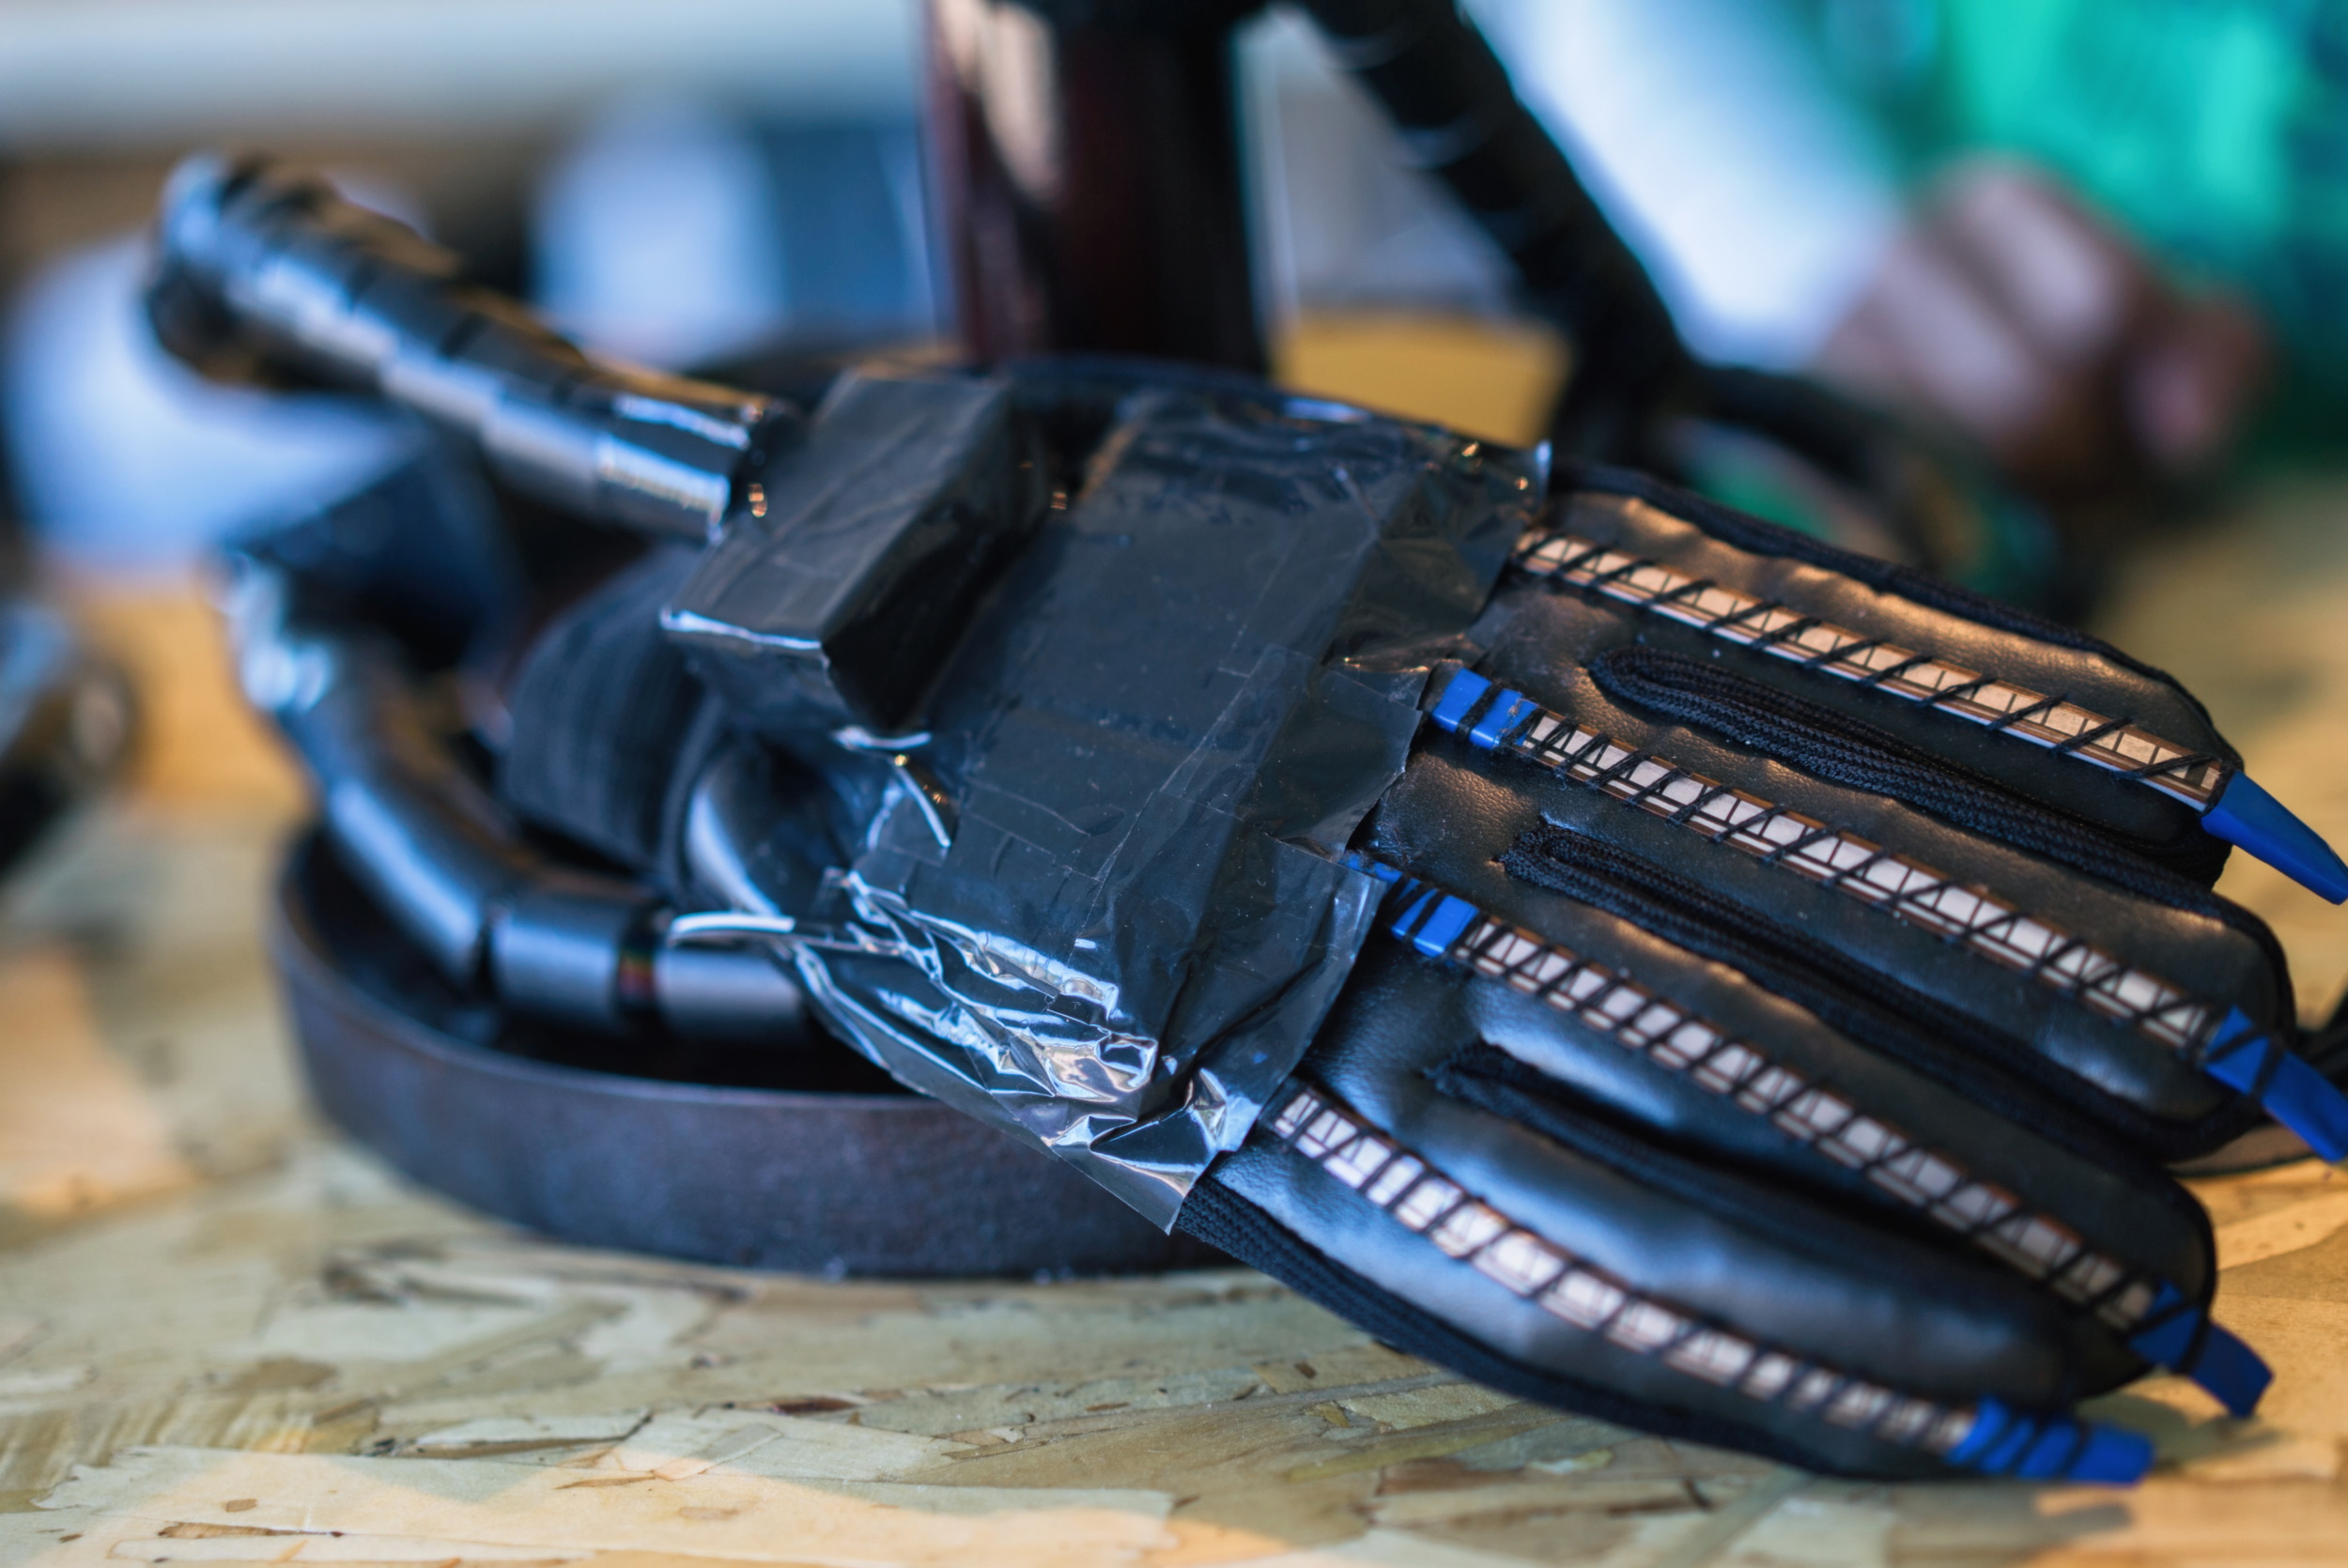 Guante de exoesqueleto de V Bionic con su cobertura completa.